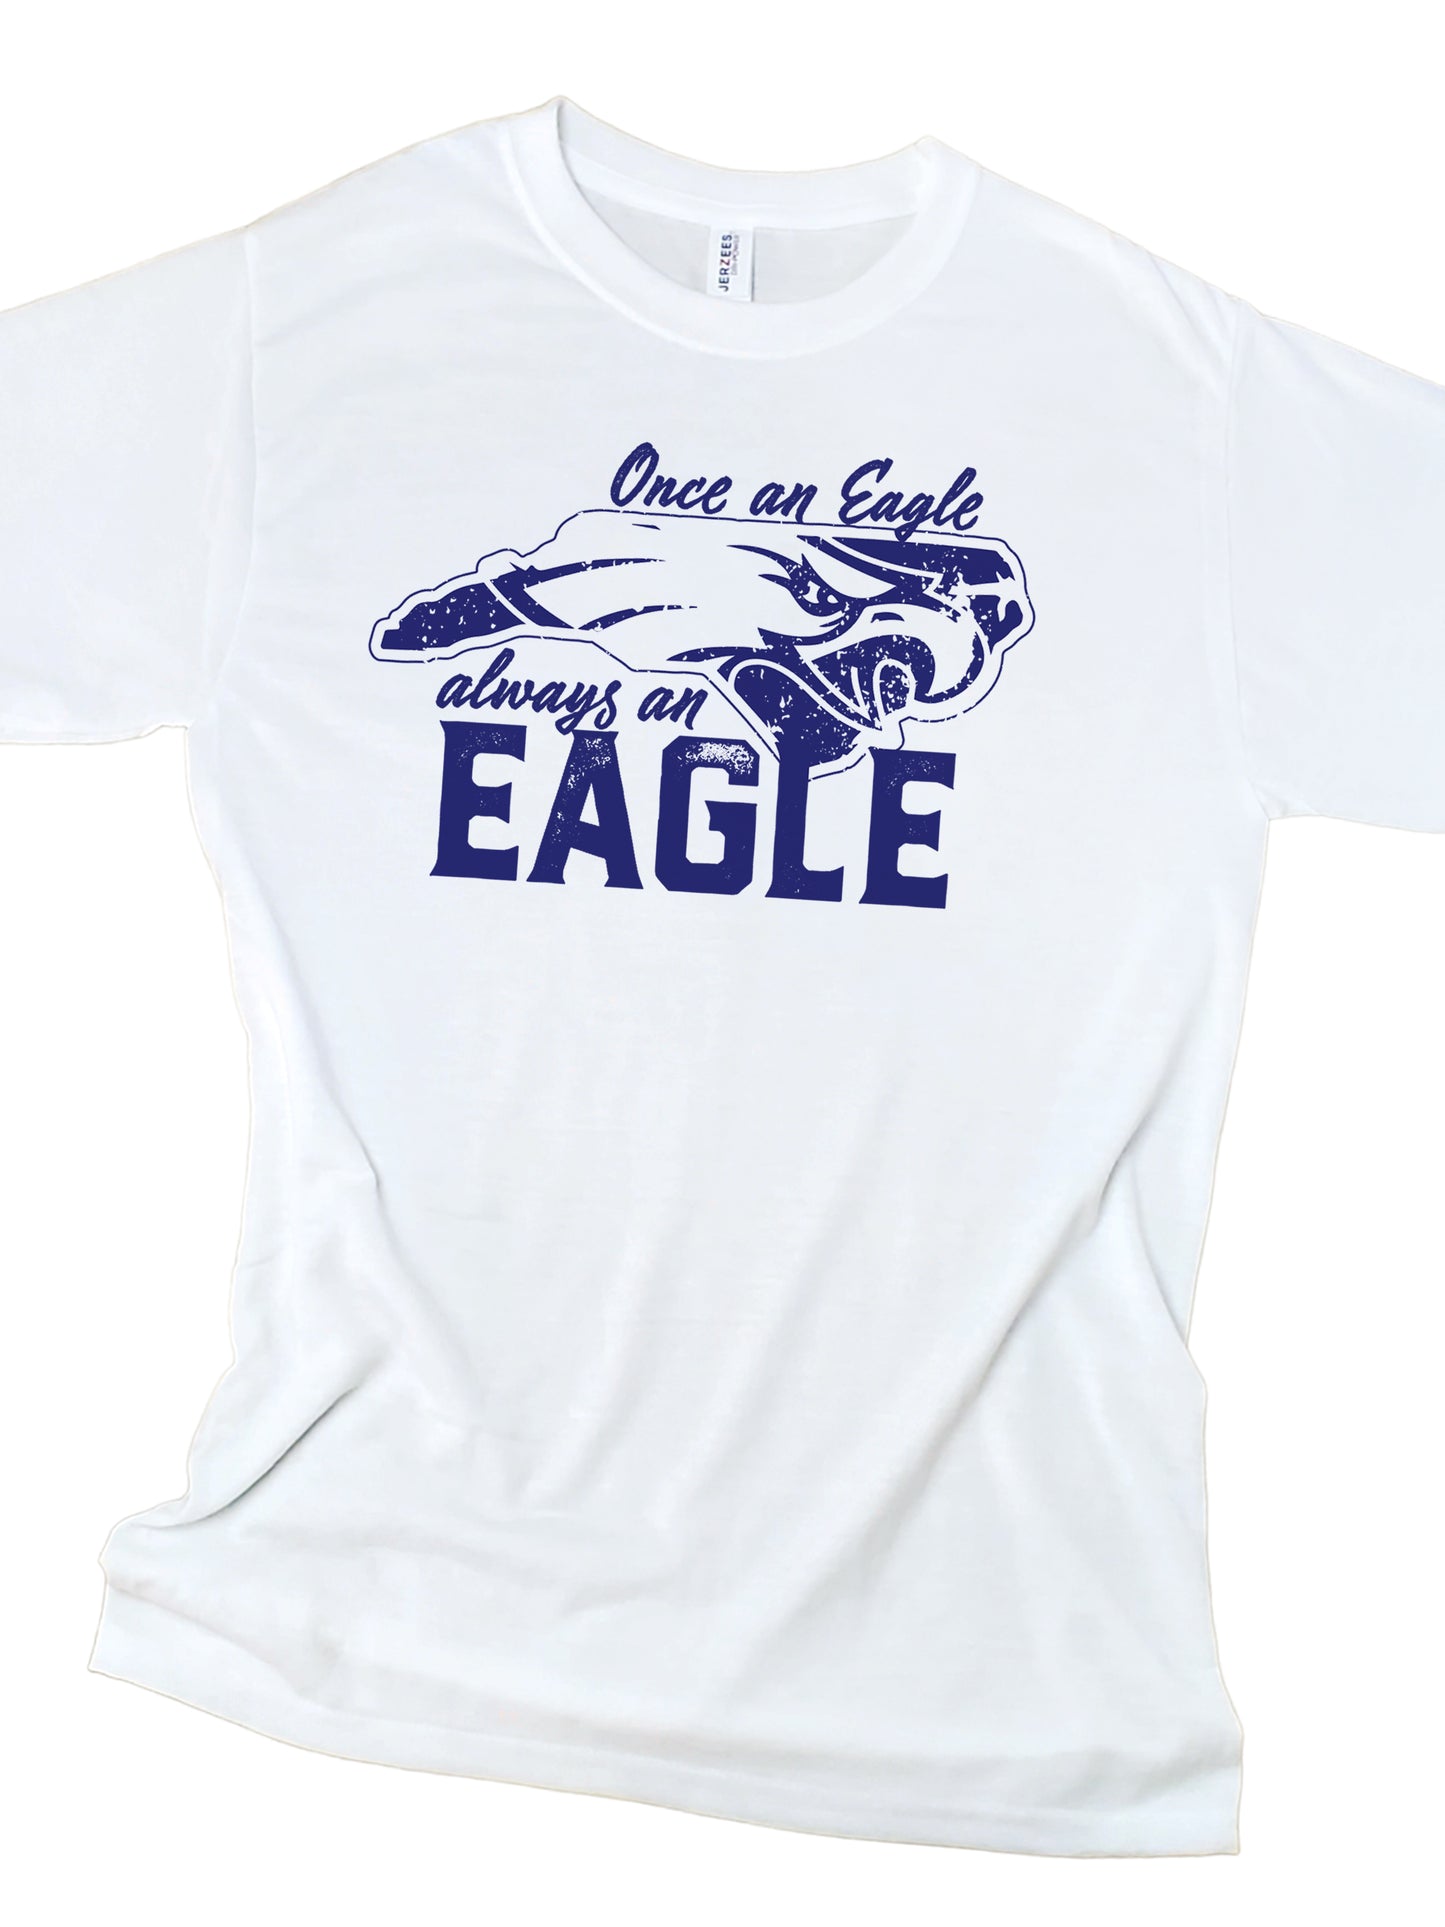 EFHS Eagles Spirit Wear, Custom Eagles shirts, Tee shirt Feel Eagles tops